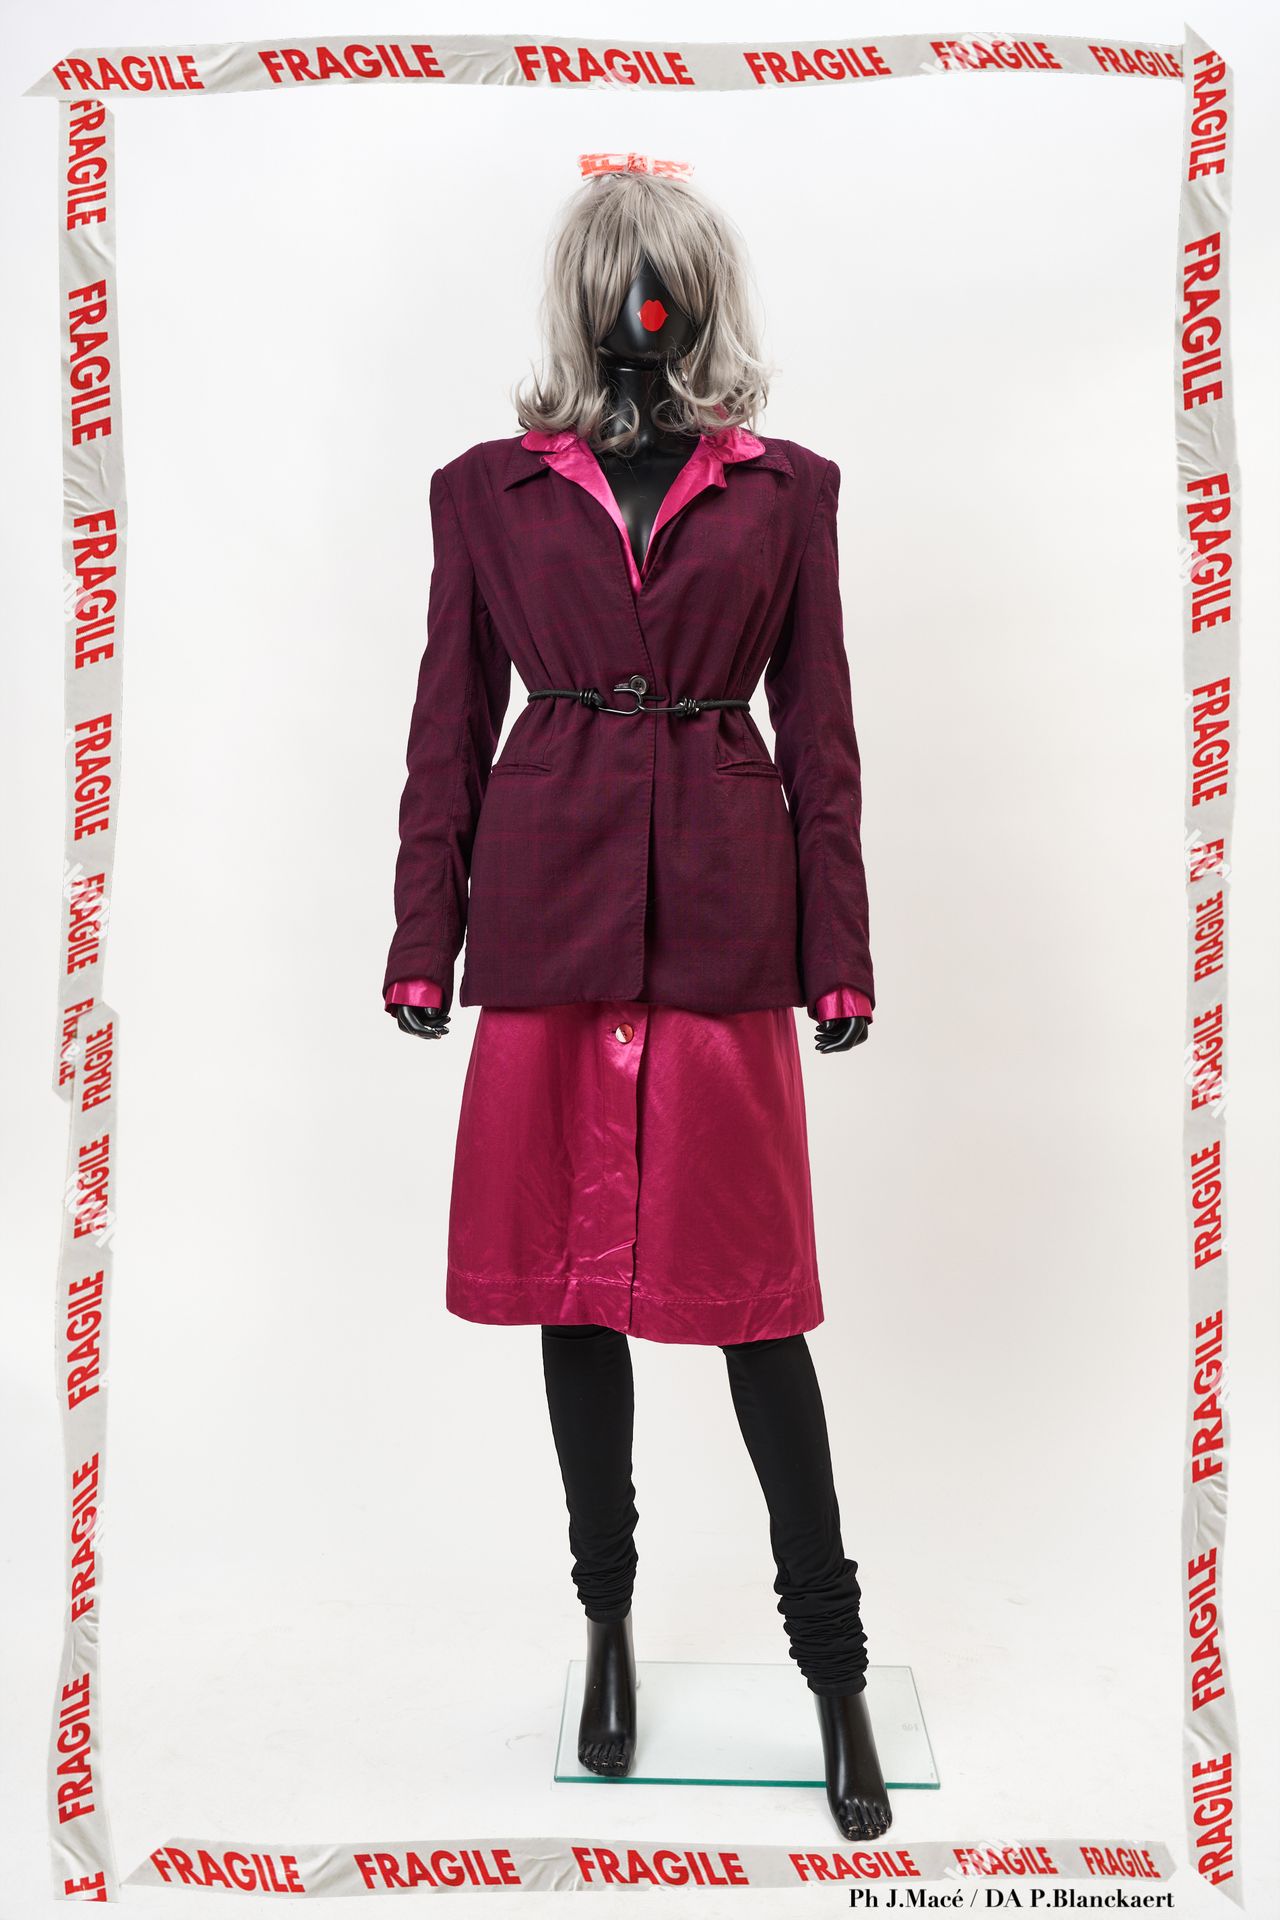 MAISON MARTIN MARGIELA Jacket

burgundy and black checkered wool jacket made fro&hellip;